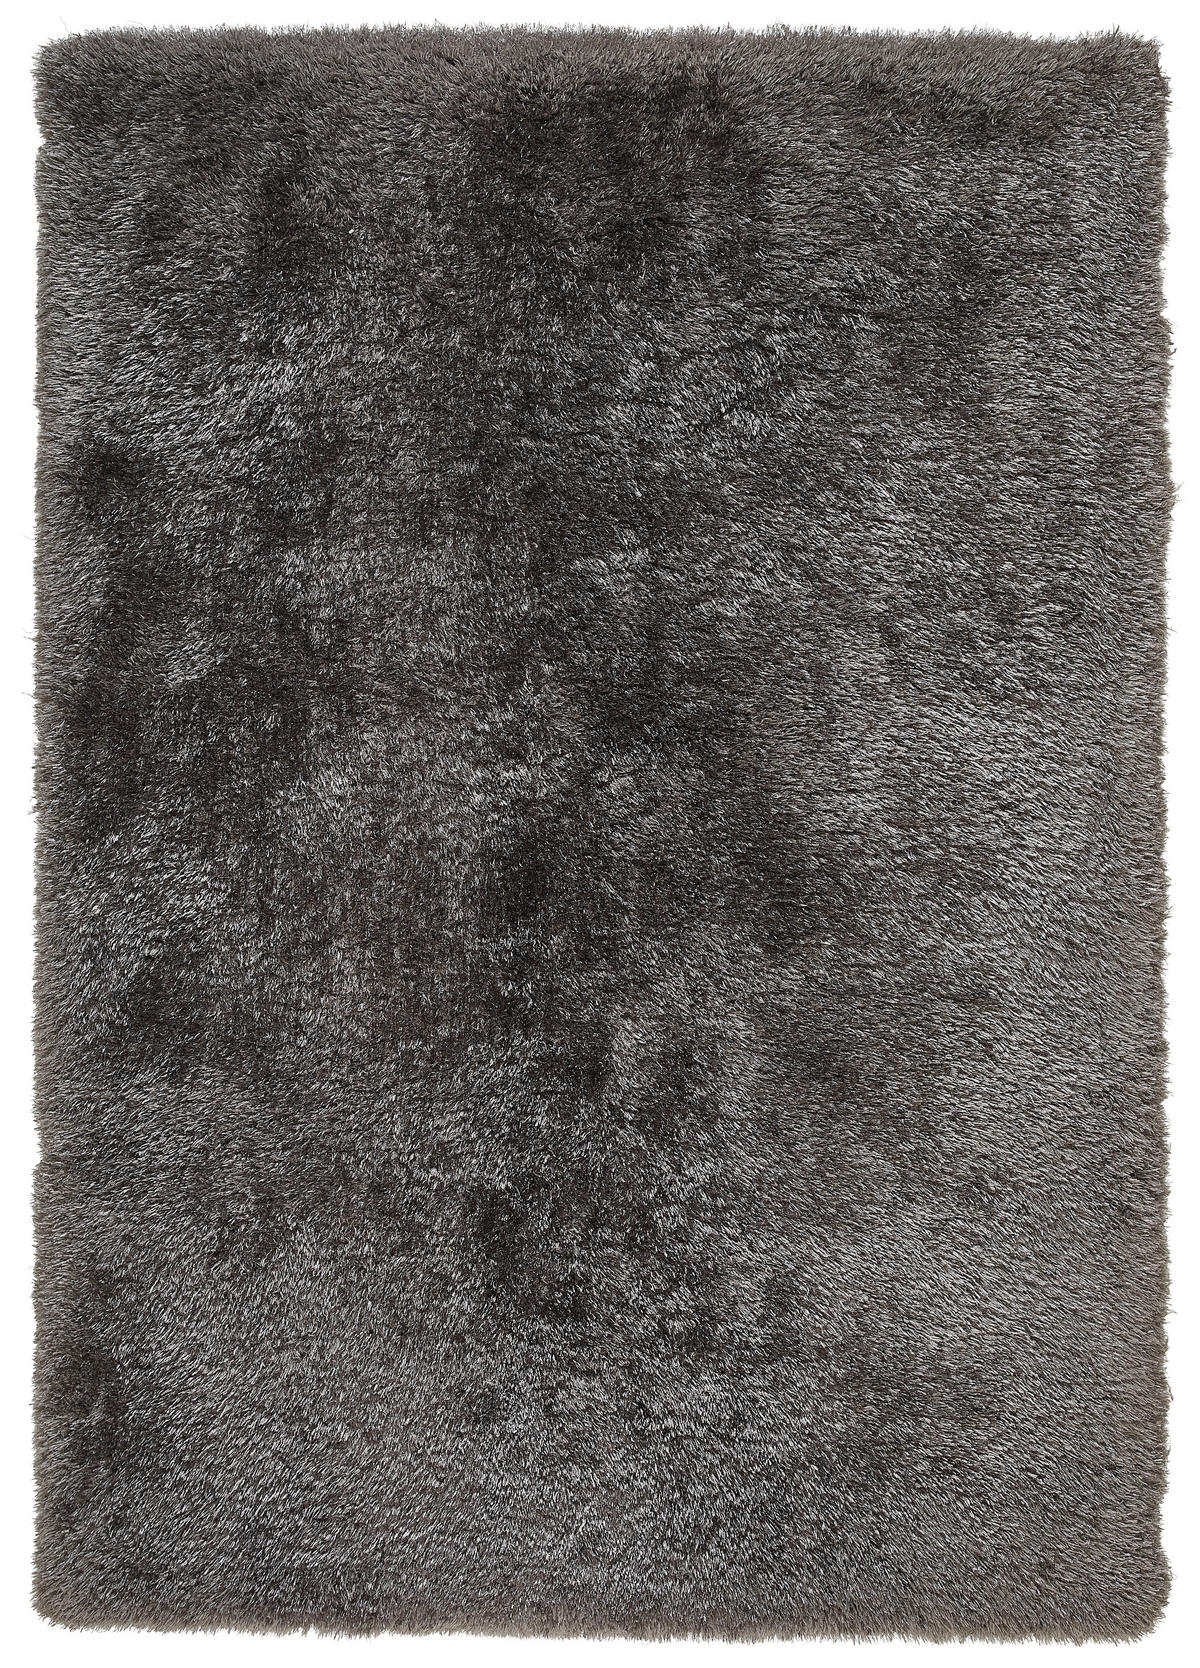 HOCHFLORTEPPICH 160/230 cm Shinning Shag  - Dunkelgrau, KONVENTIONELL, Textil (160/230cm) - Novel